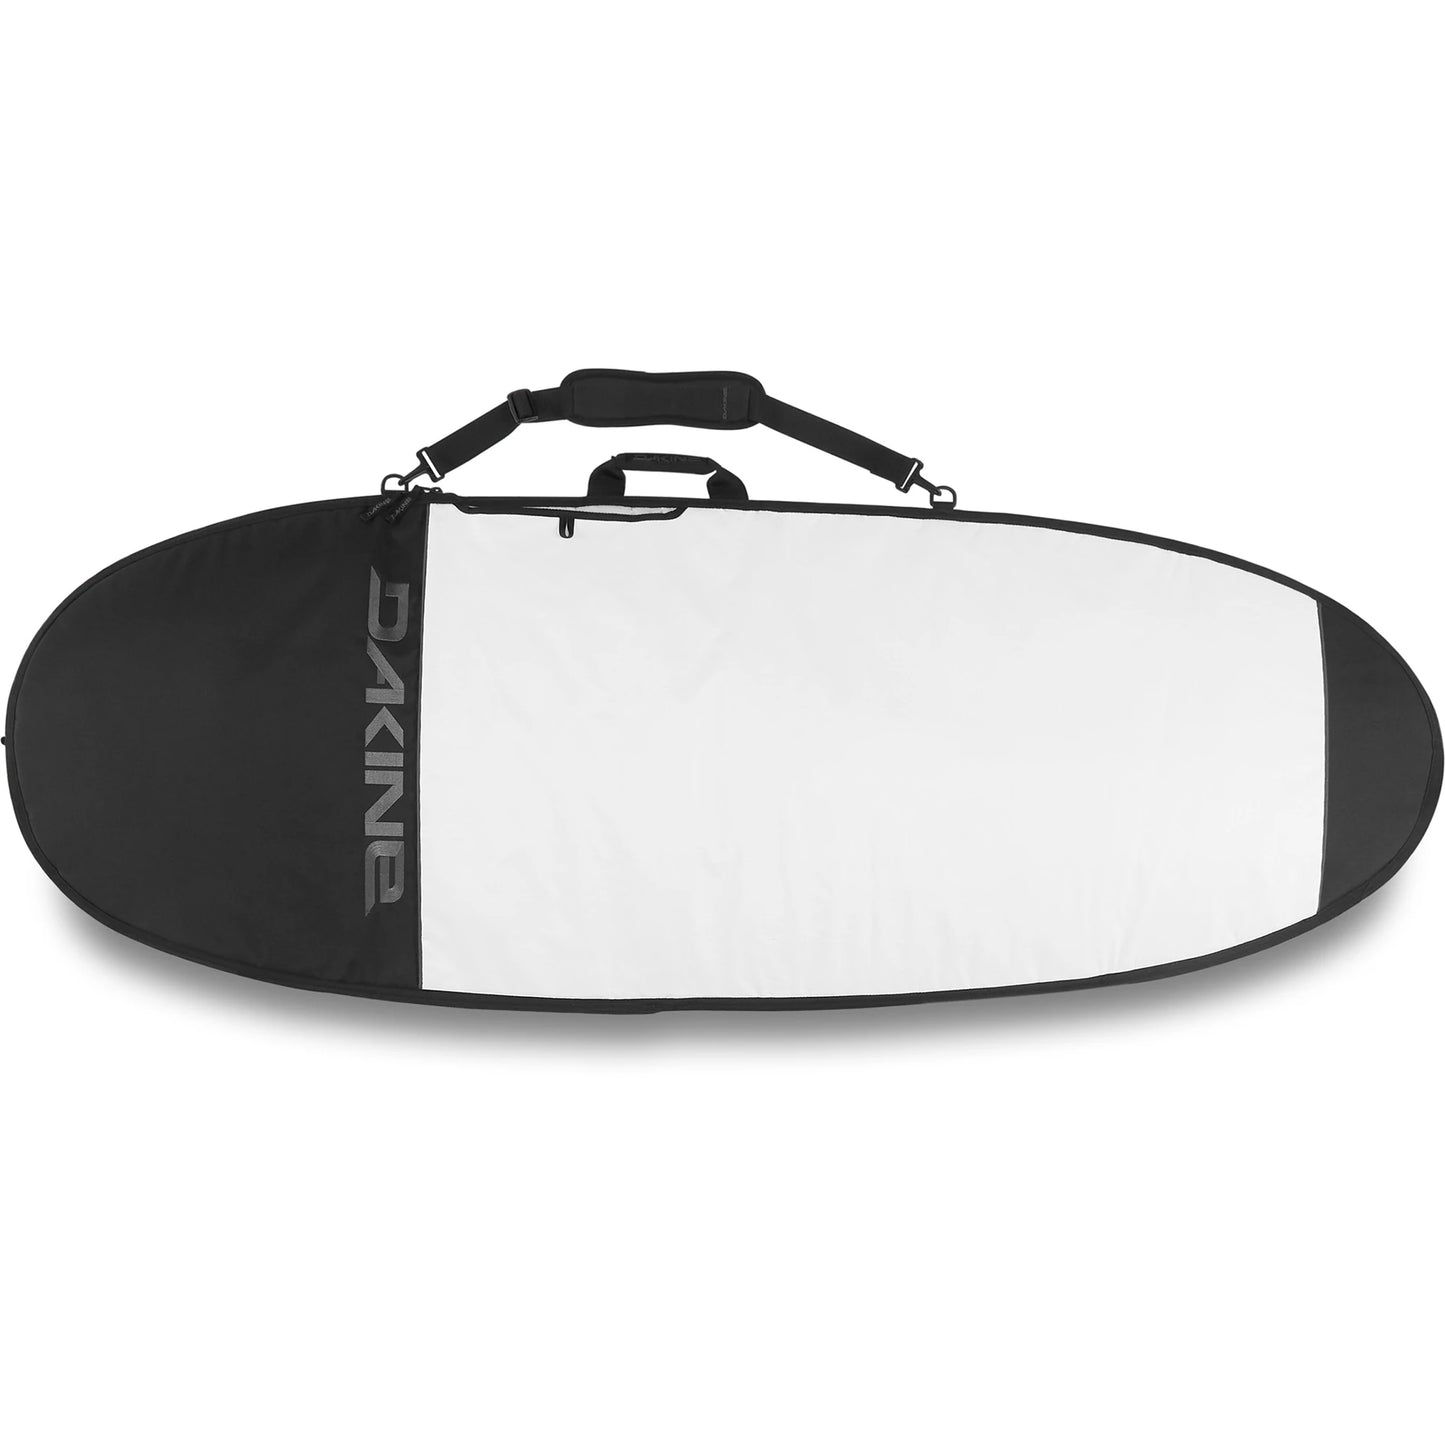 DAYLIGHT SURFBOARD BAG - HYBRID